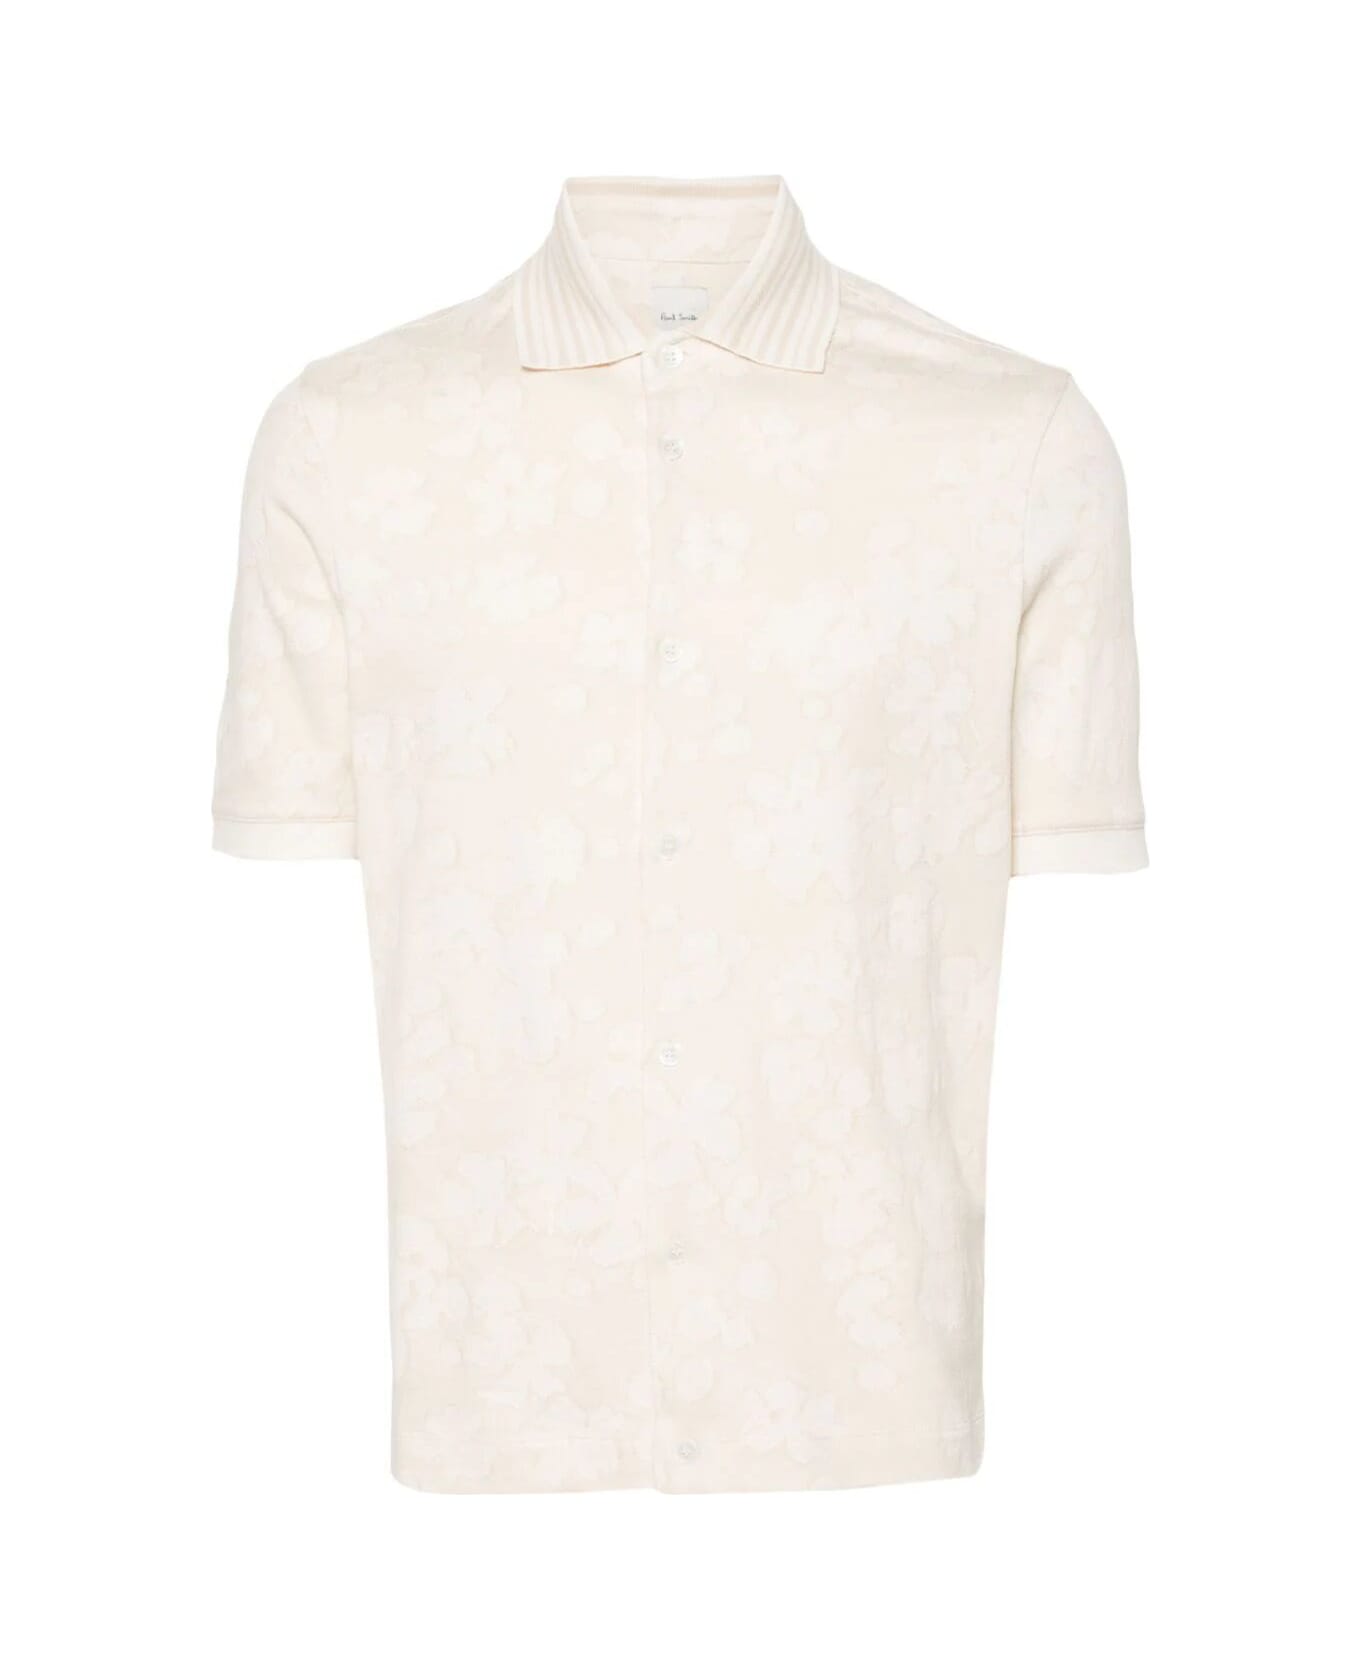 Paul Smith Mens Floral Jacquard Shirt - Whites シャツ